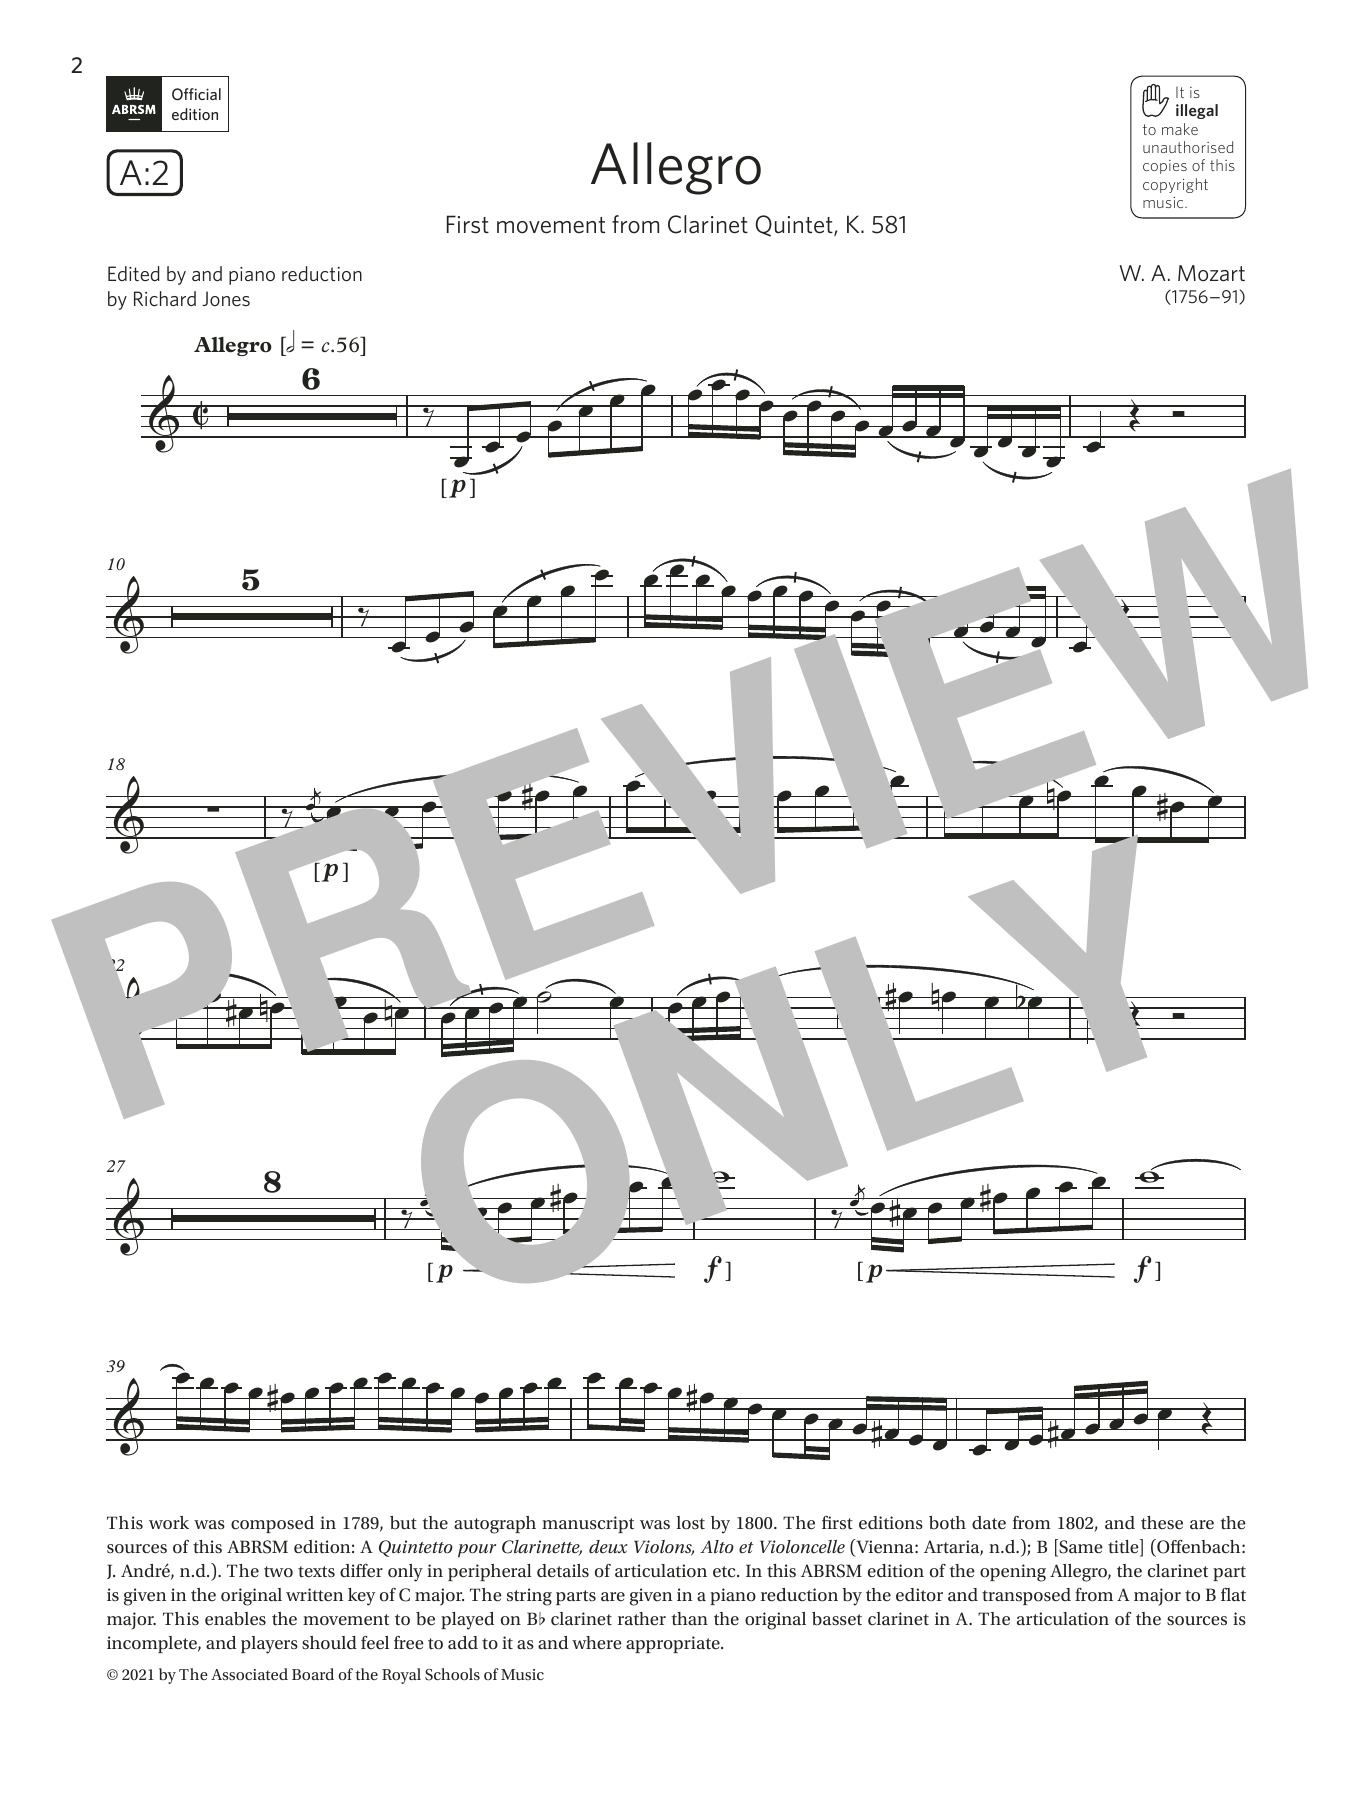 Download Wolfgang Amadeus Mozart Allegro (from Clarinet Quintet, K.581) Sheet Music